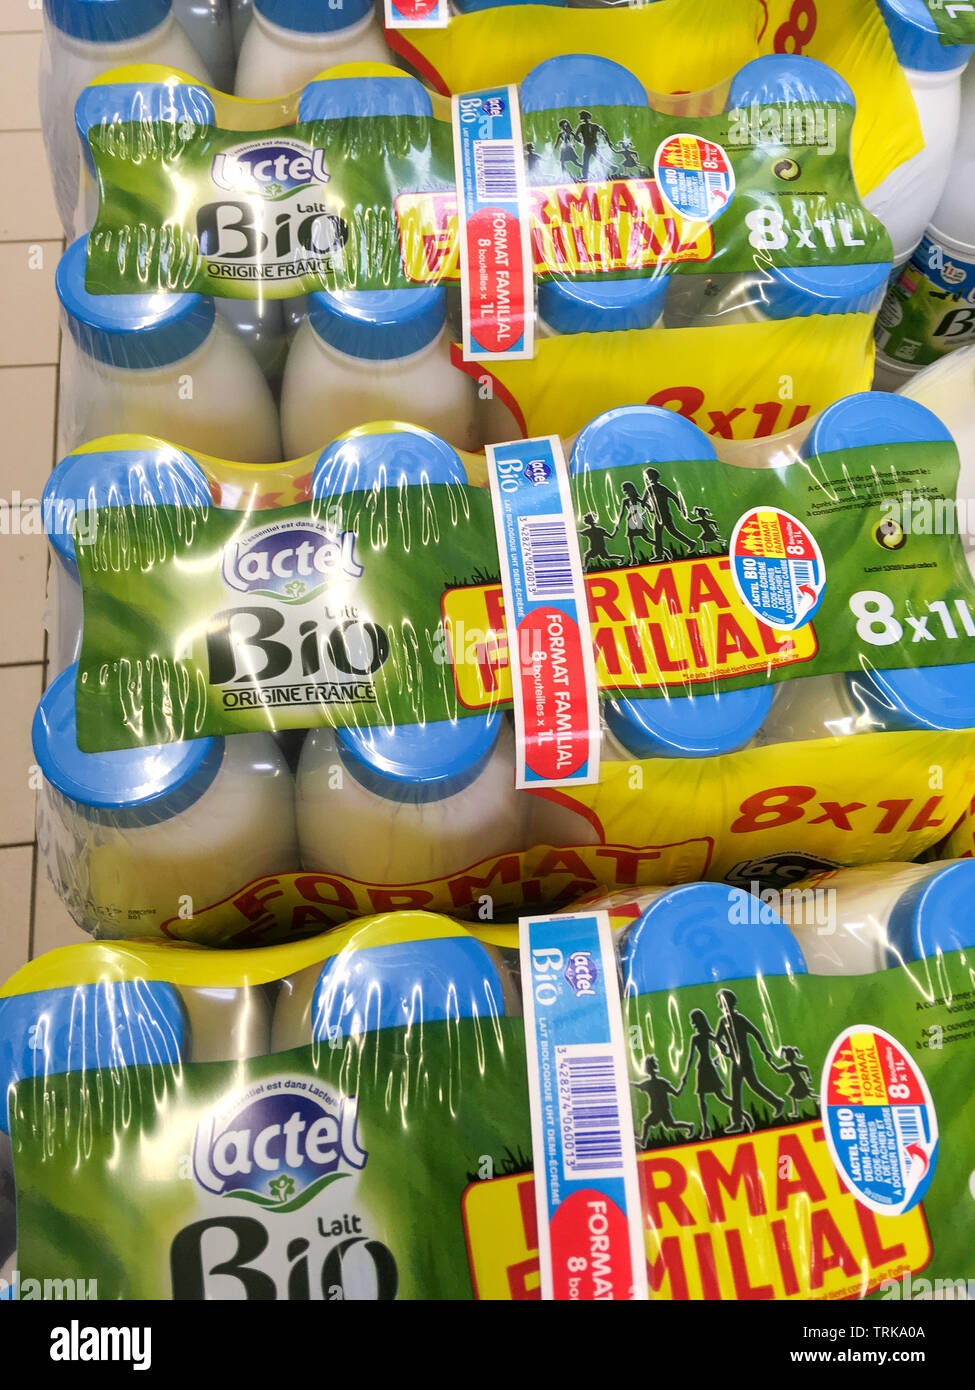 Organic milk bottles, France Stock Photo